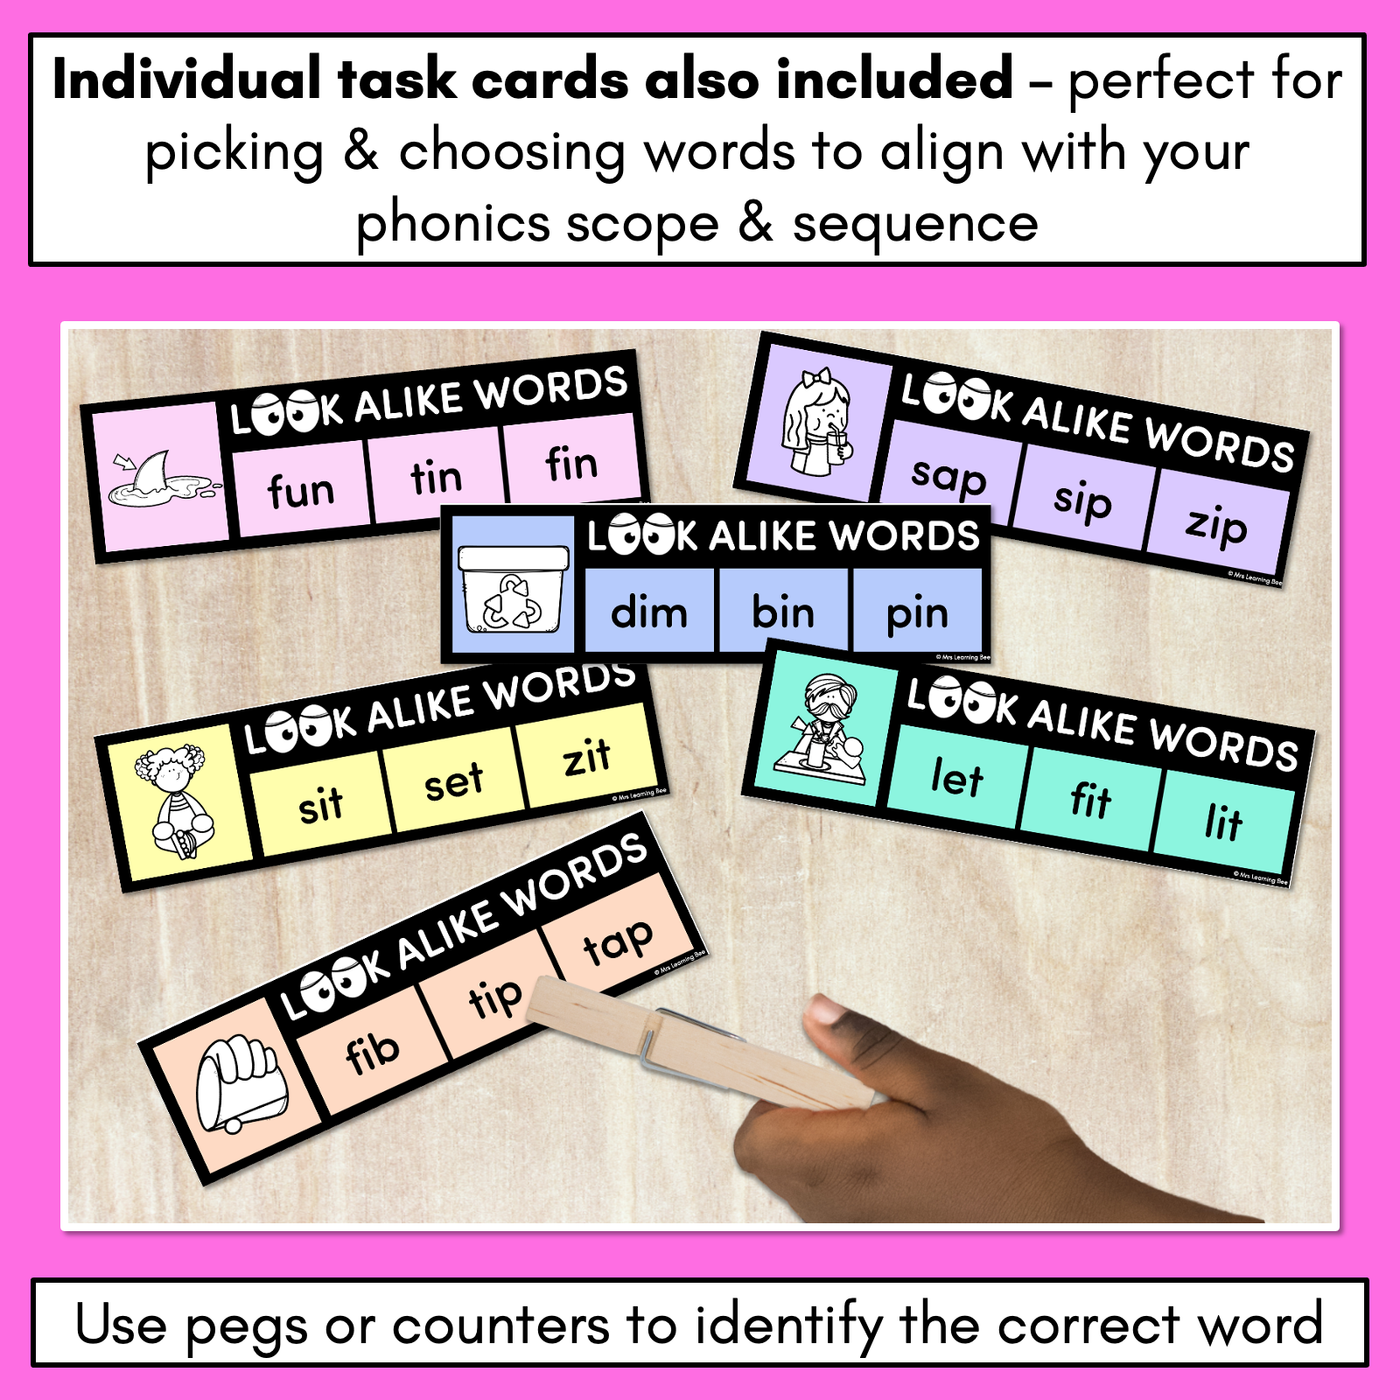 LOOKALIKE WORDS with CVC Words - Short I CVC Words - Task Cards & Printables